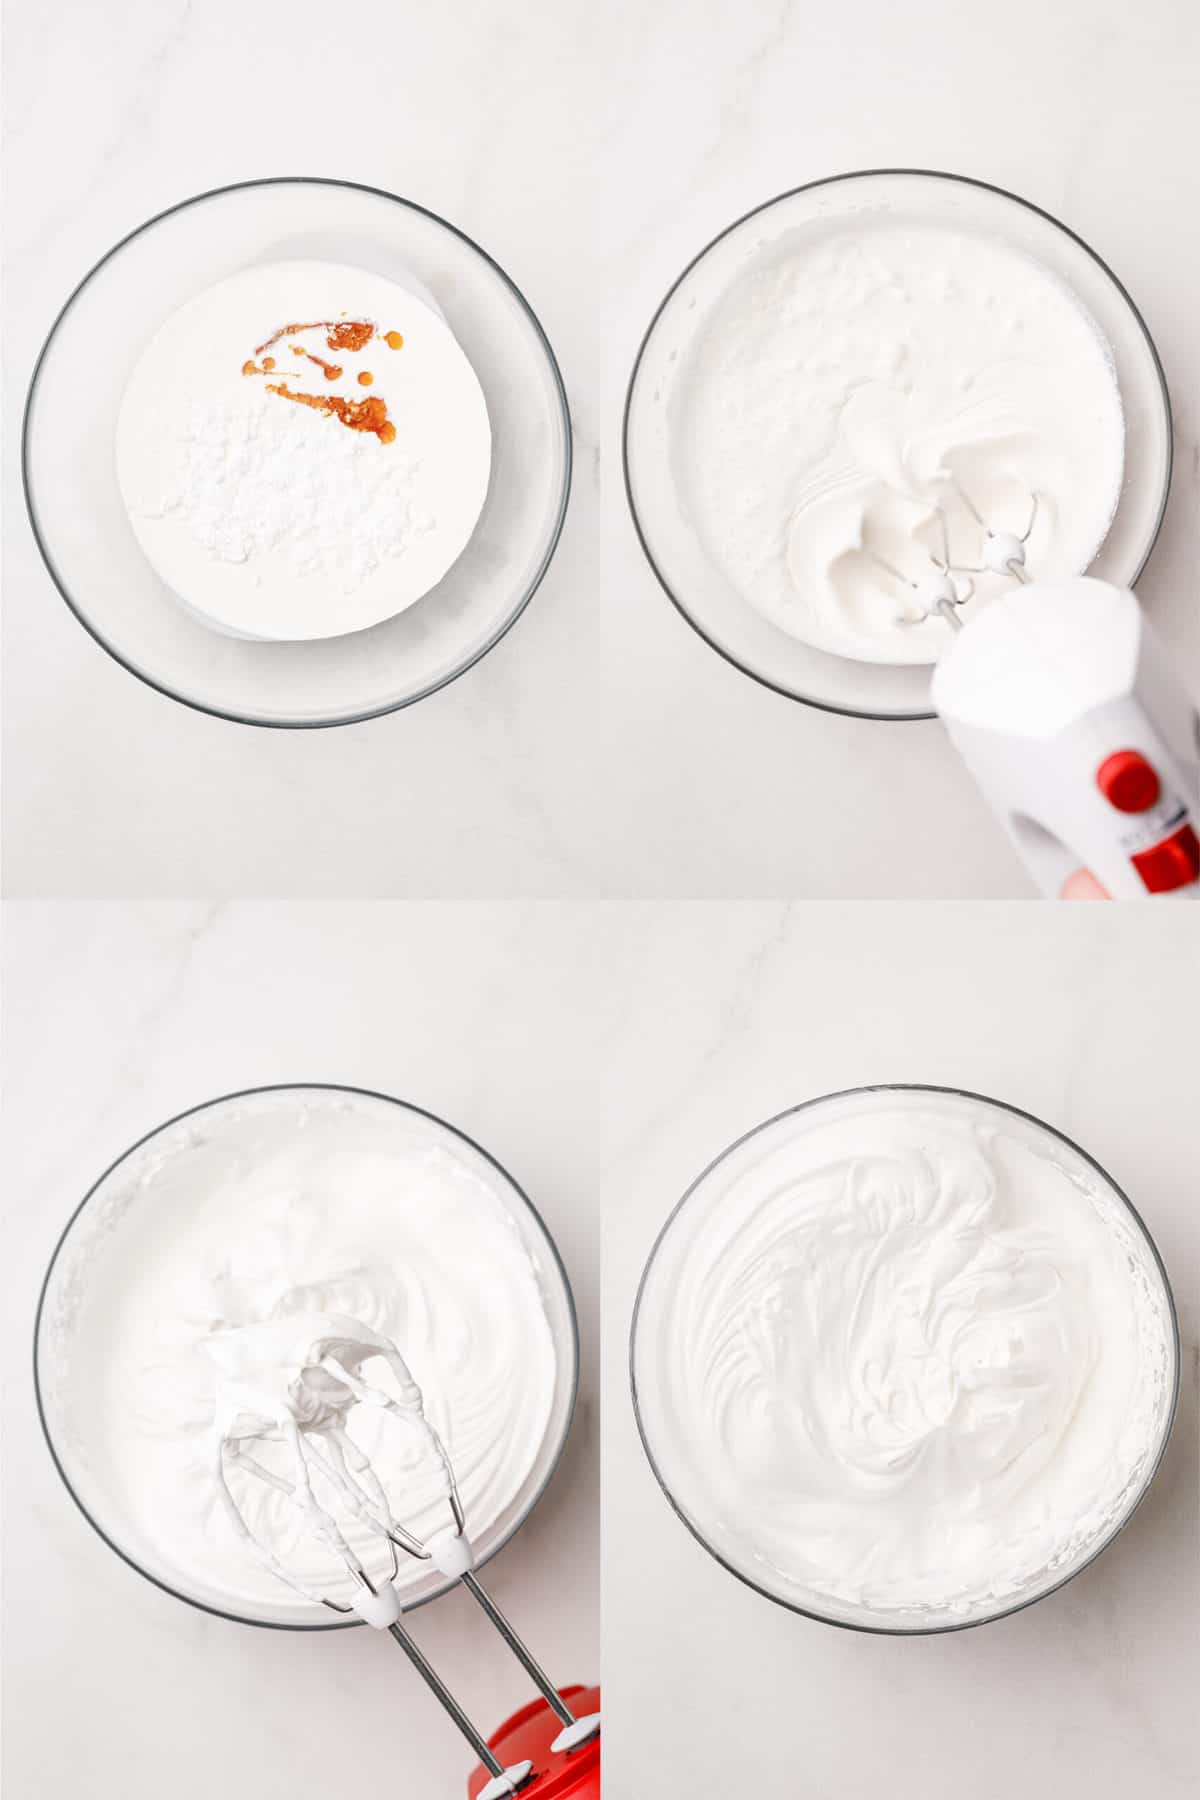 steps to make whipped cream aka chantilly cream